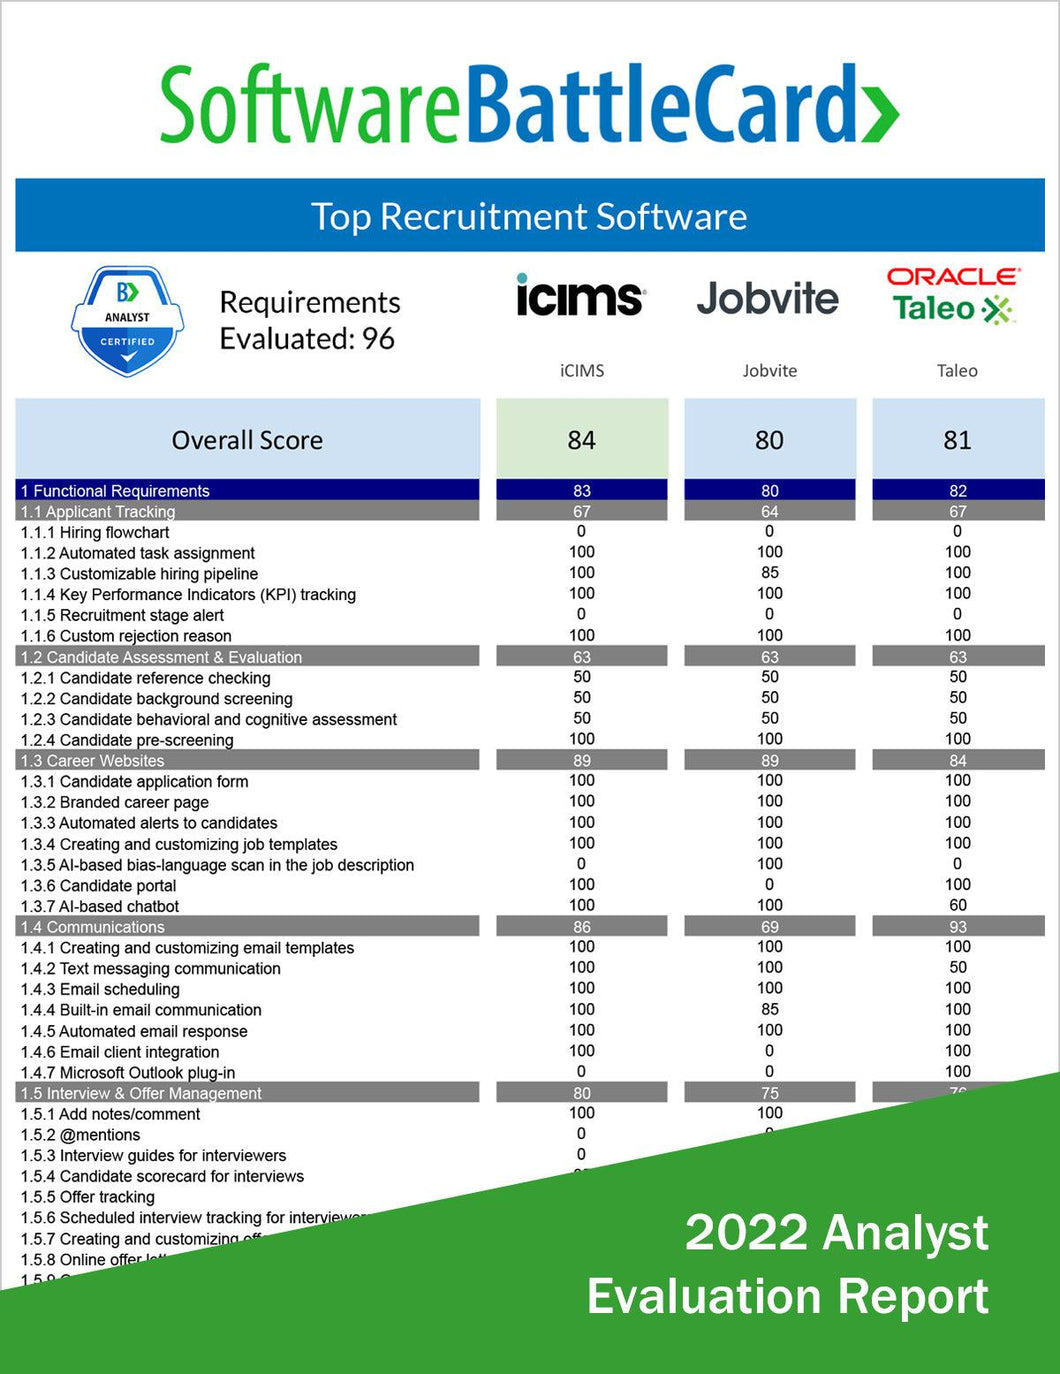 Recruitment Software BattleCard: iCIMS vs. Jobvite vs. Oracle (Taleo)